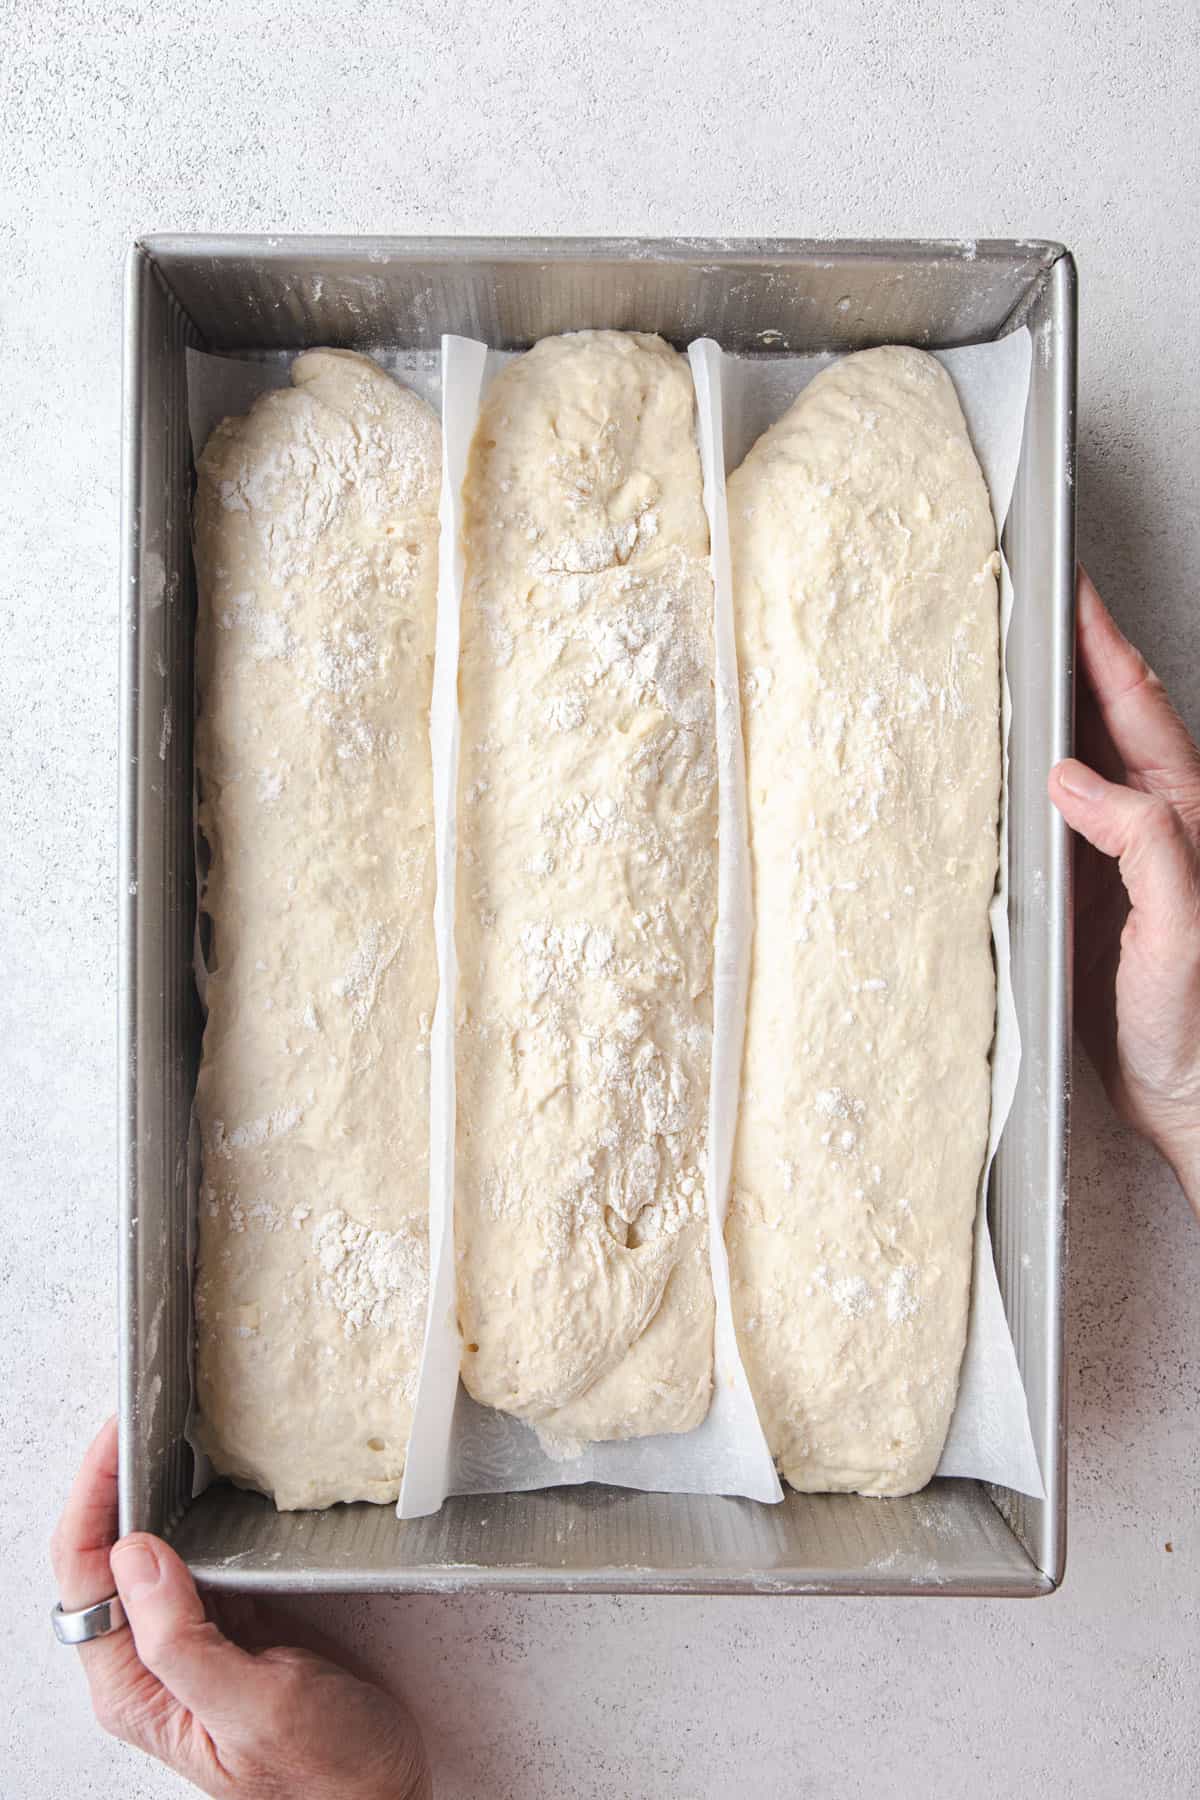 formed bread dough in a metal baking pan